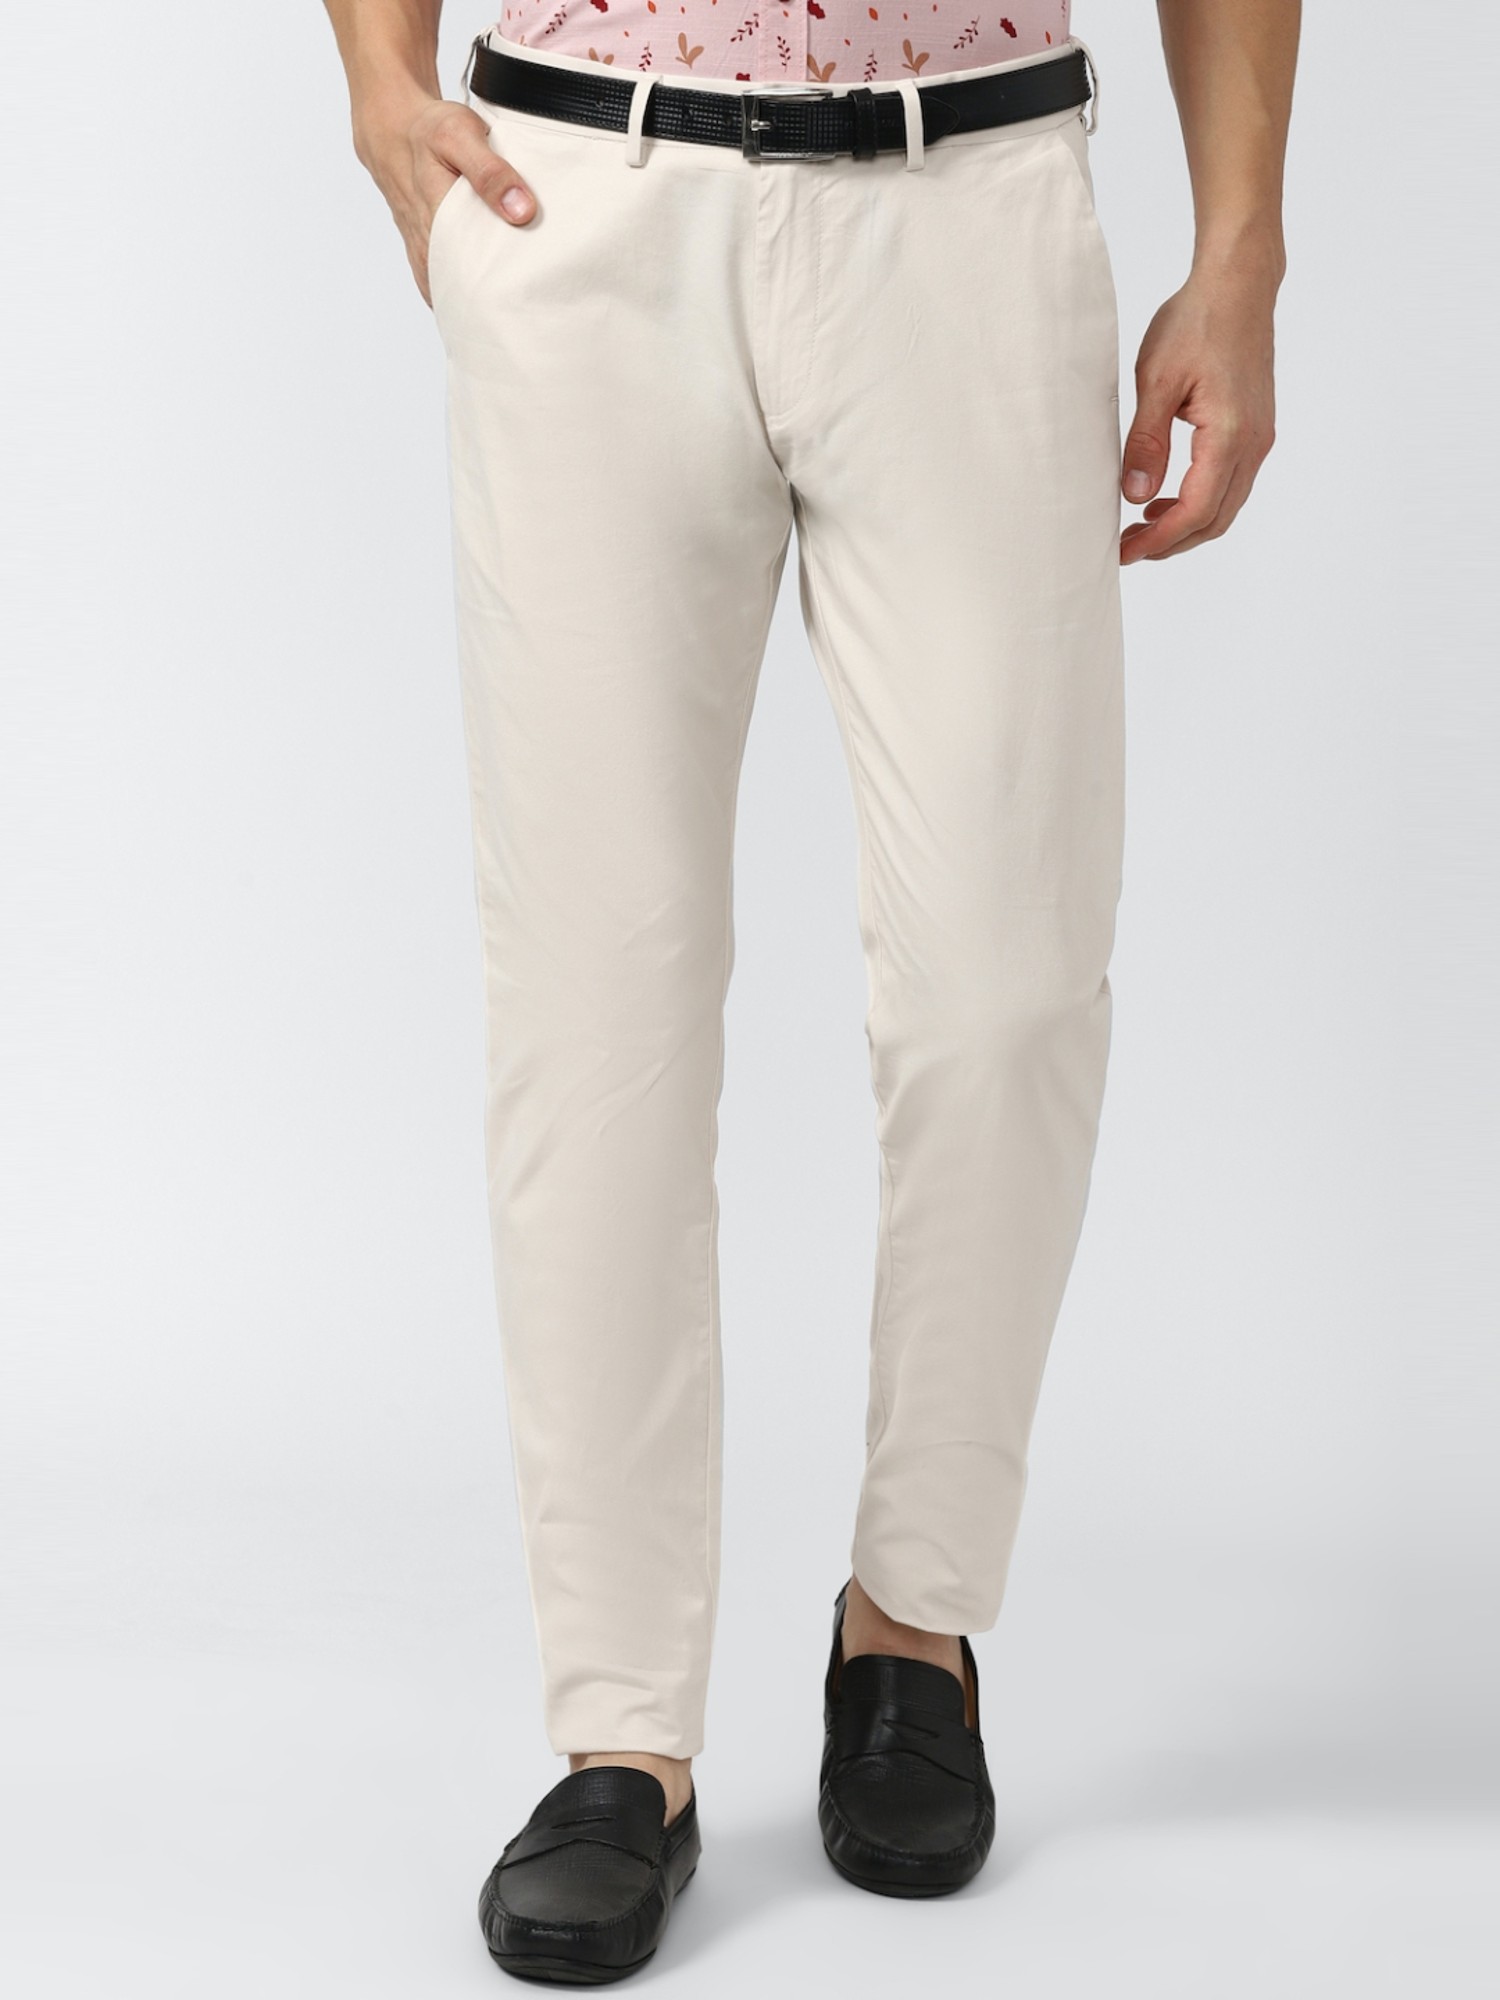 Peter England Casuals Khaki Cotton Slim Fit Trousers